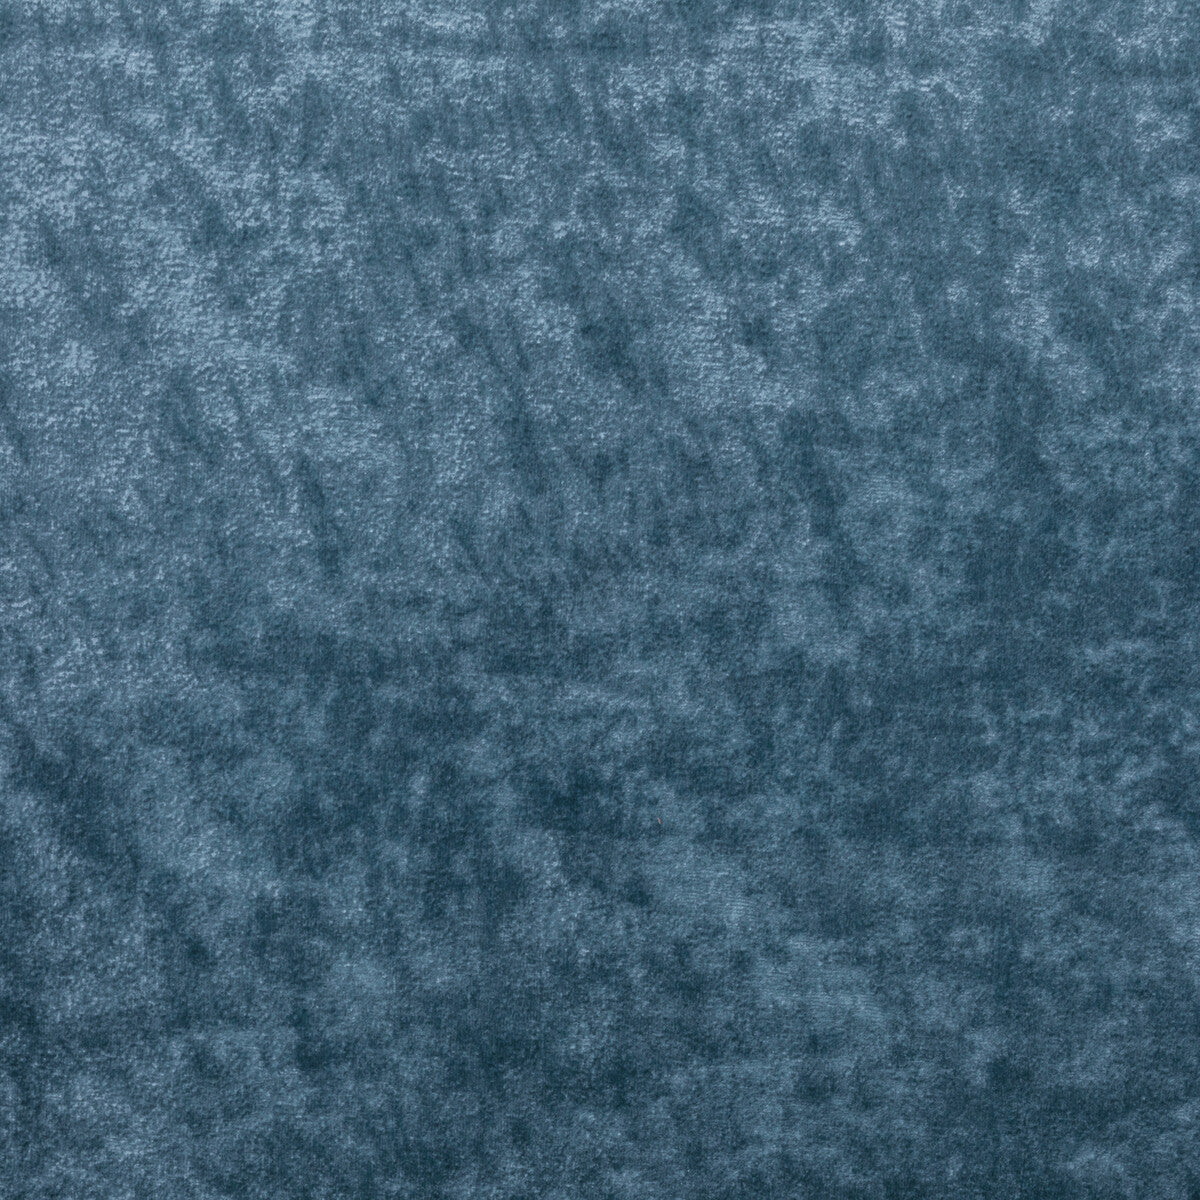 Triumphant fabric in glacier color - pattern 36065.15.0 - by Kravet Couture